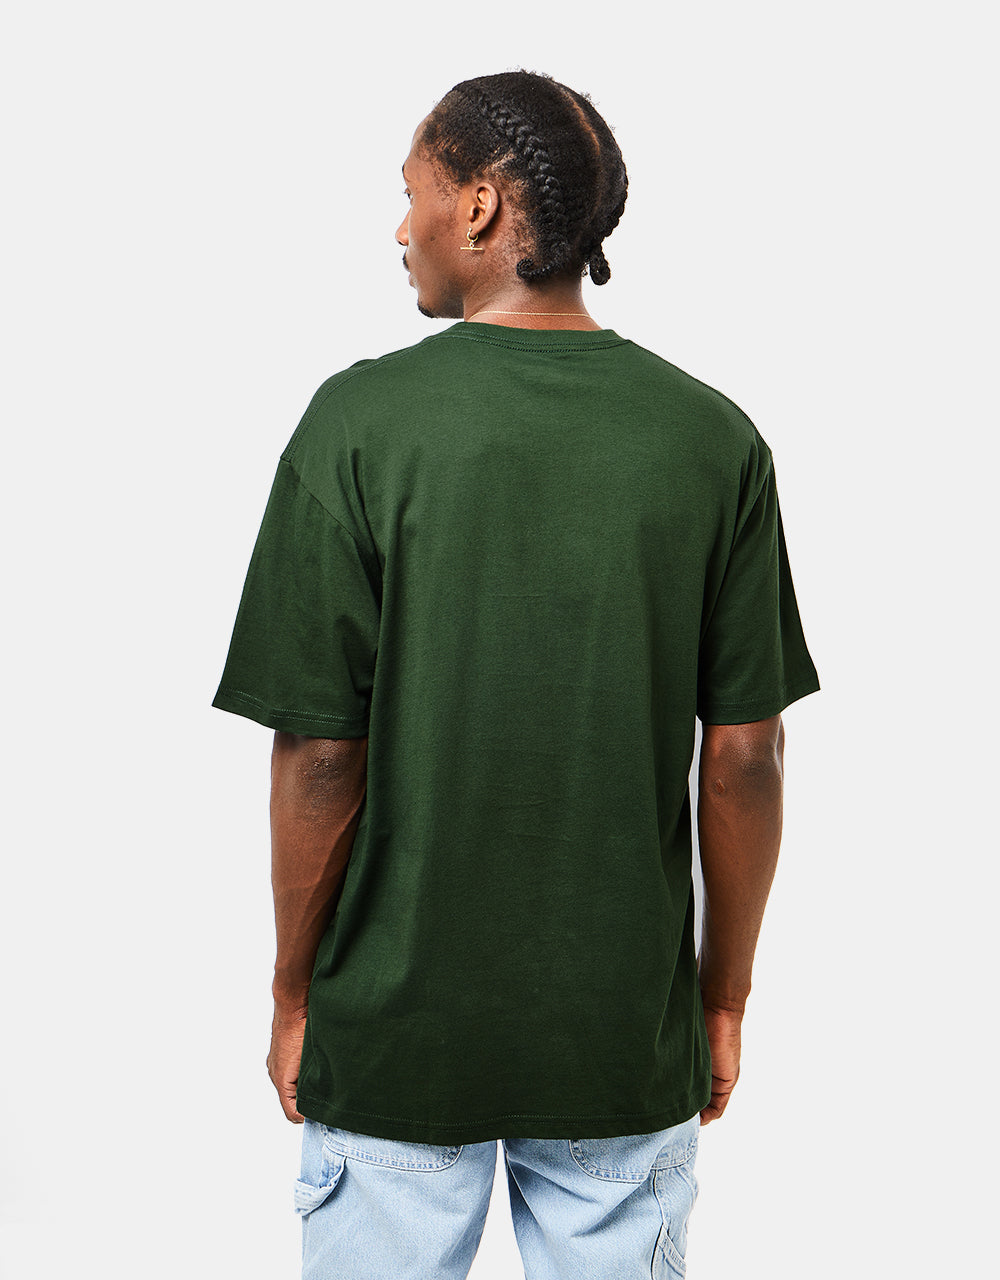 Thrasher Brick T-Shirt - Forest Green